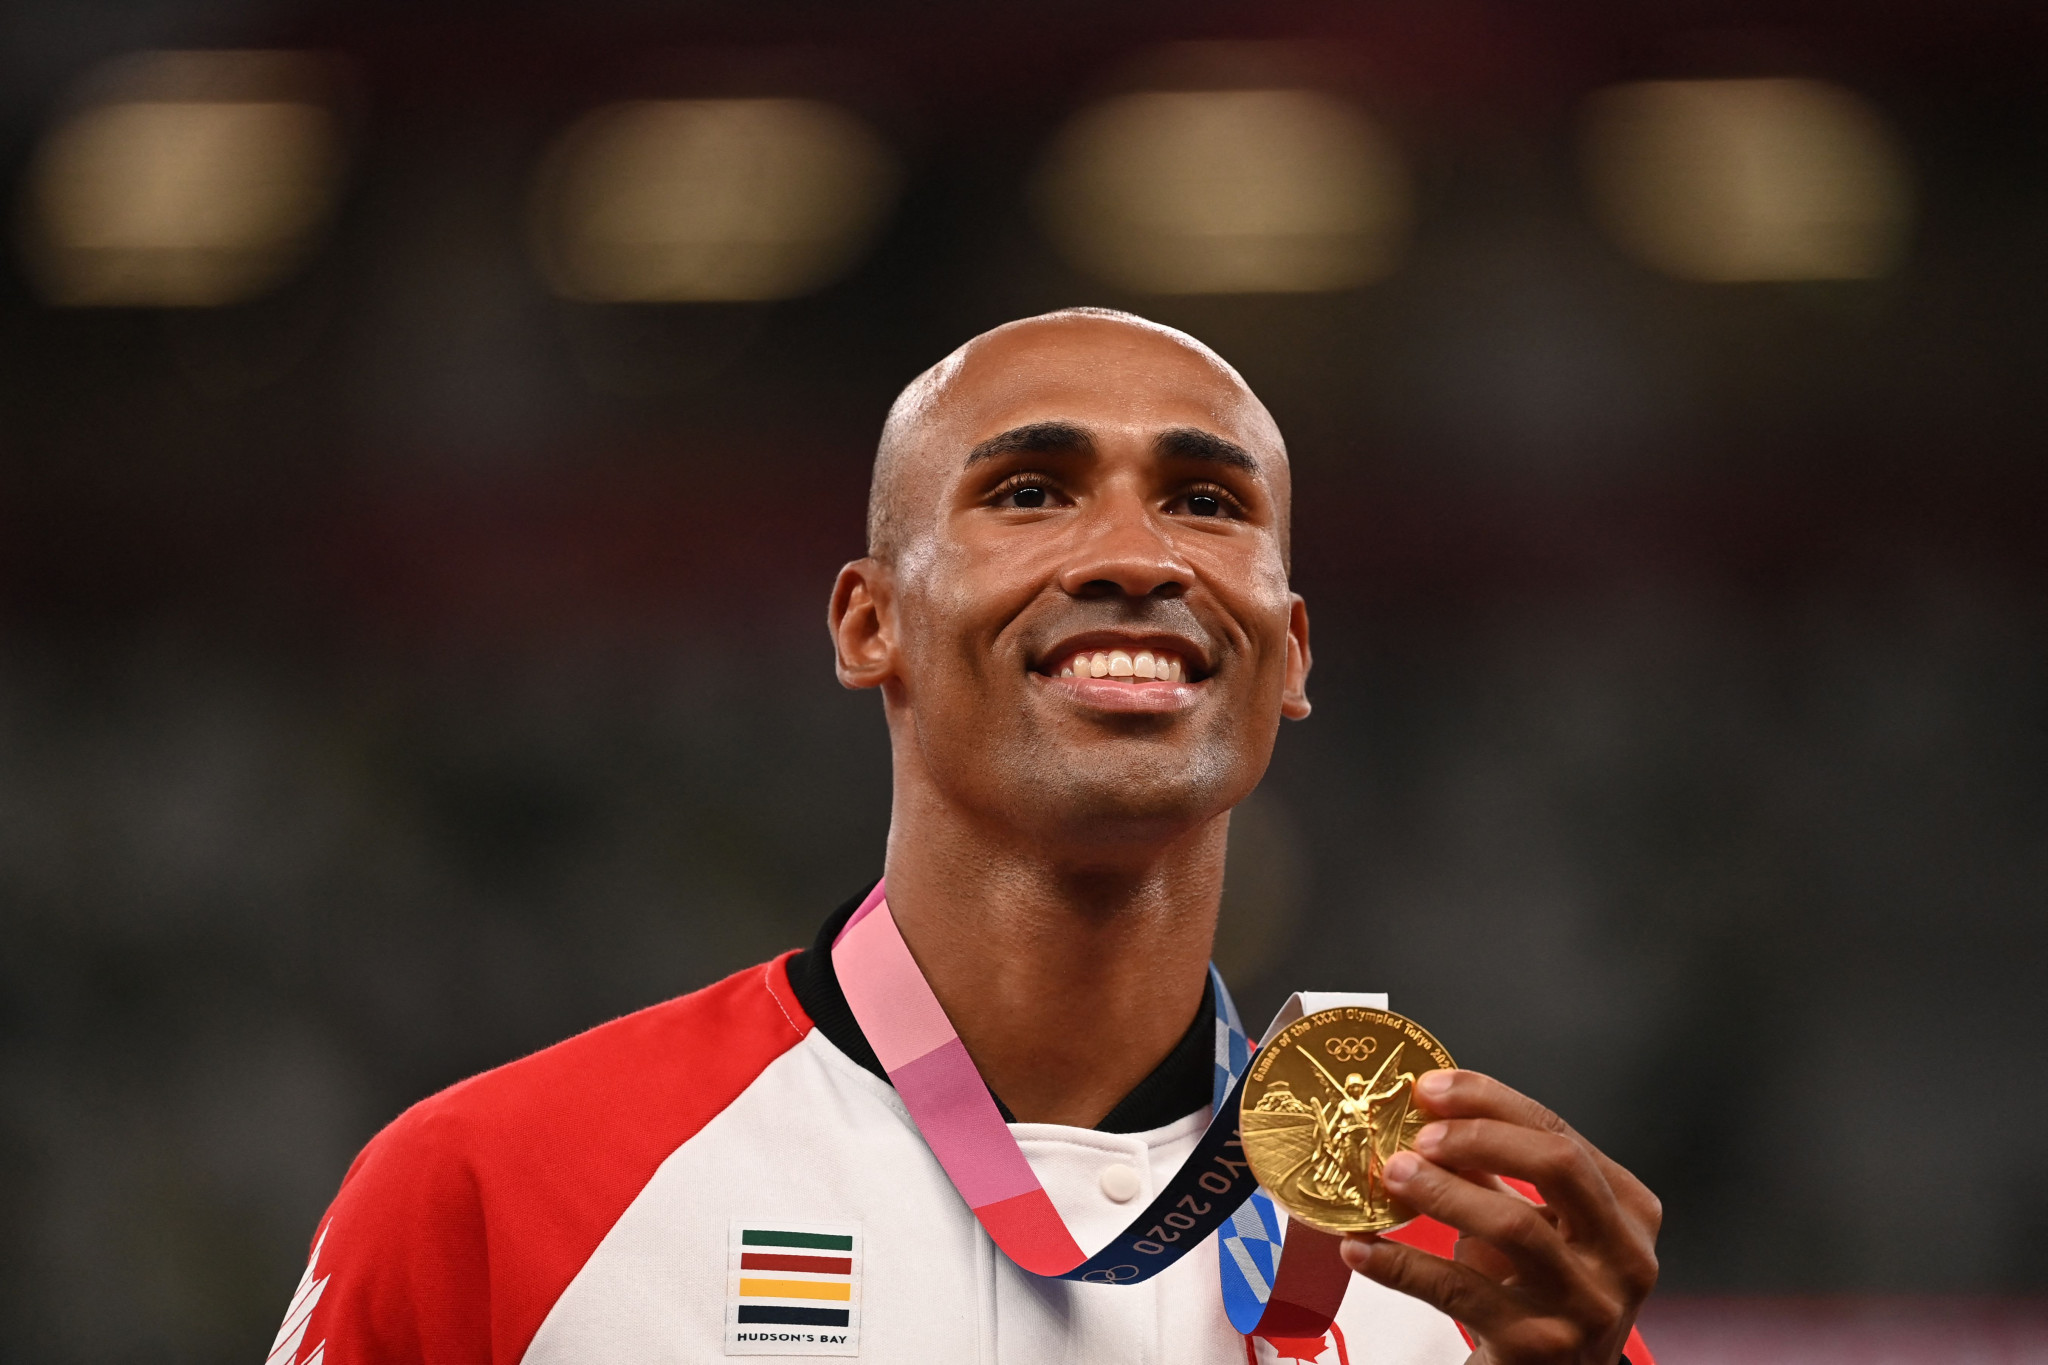 Olympic decathlon champion Warner wins Canada's Athlete of the Year award